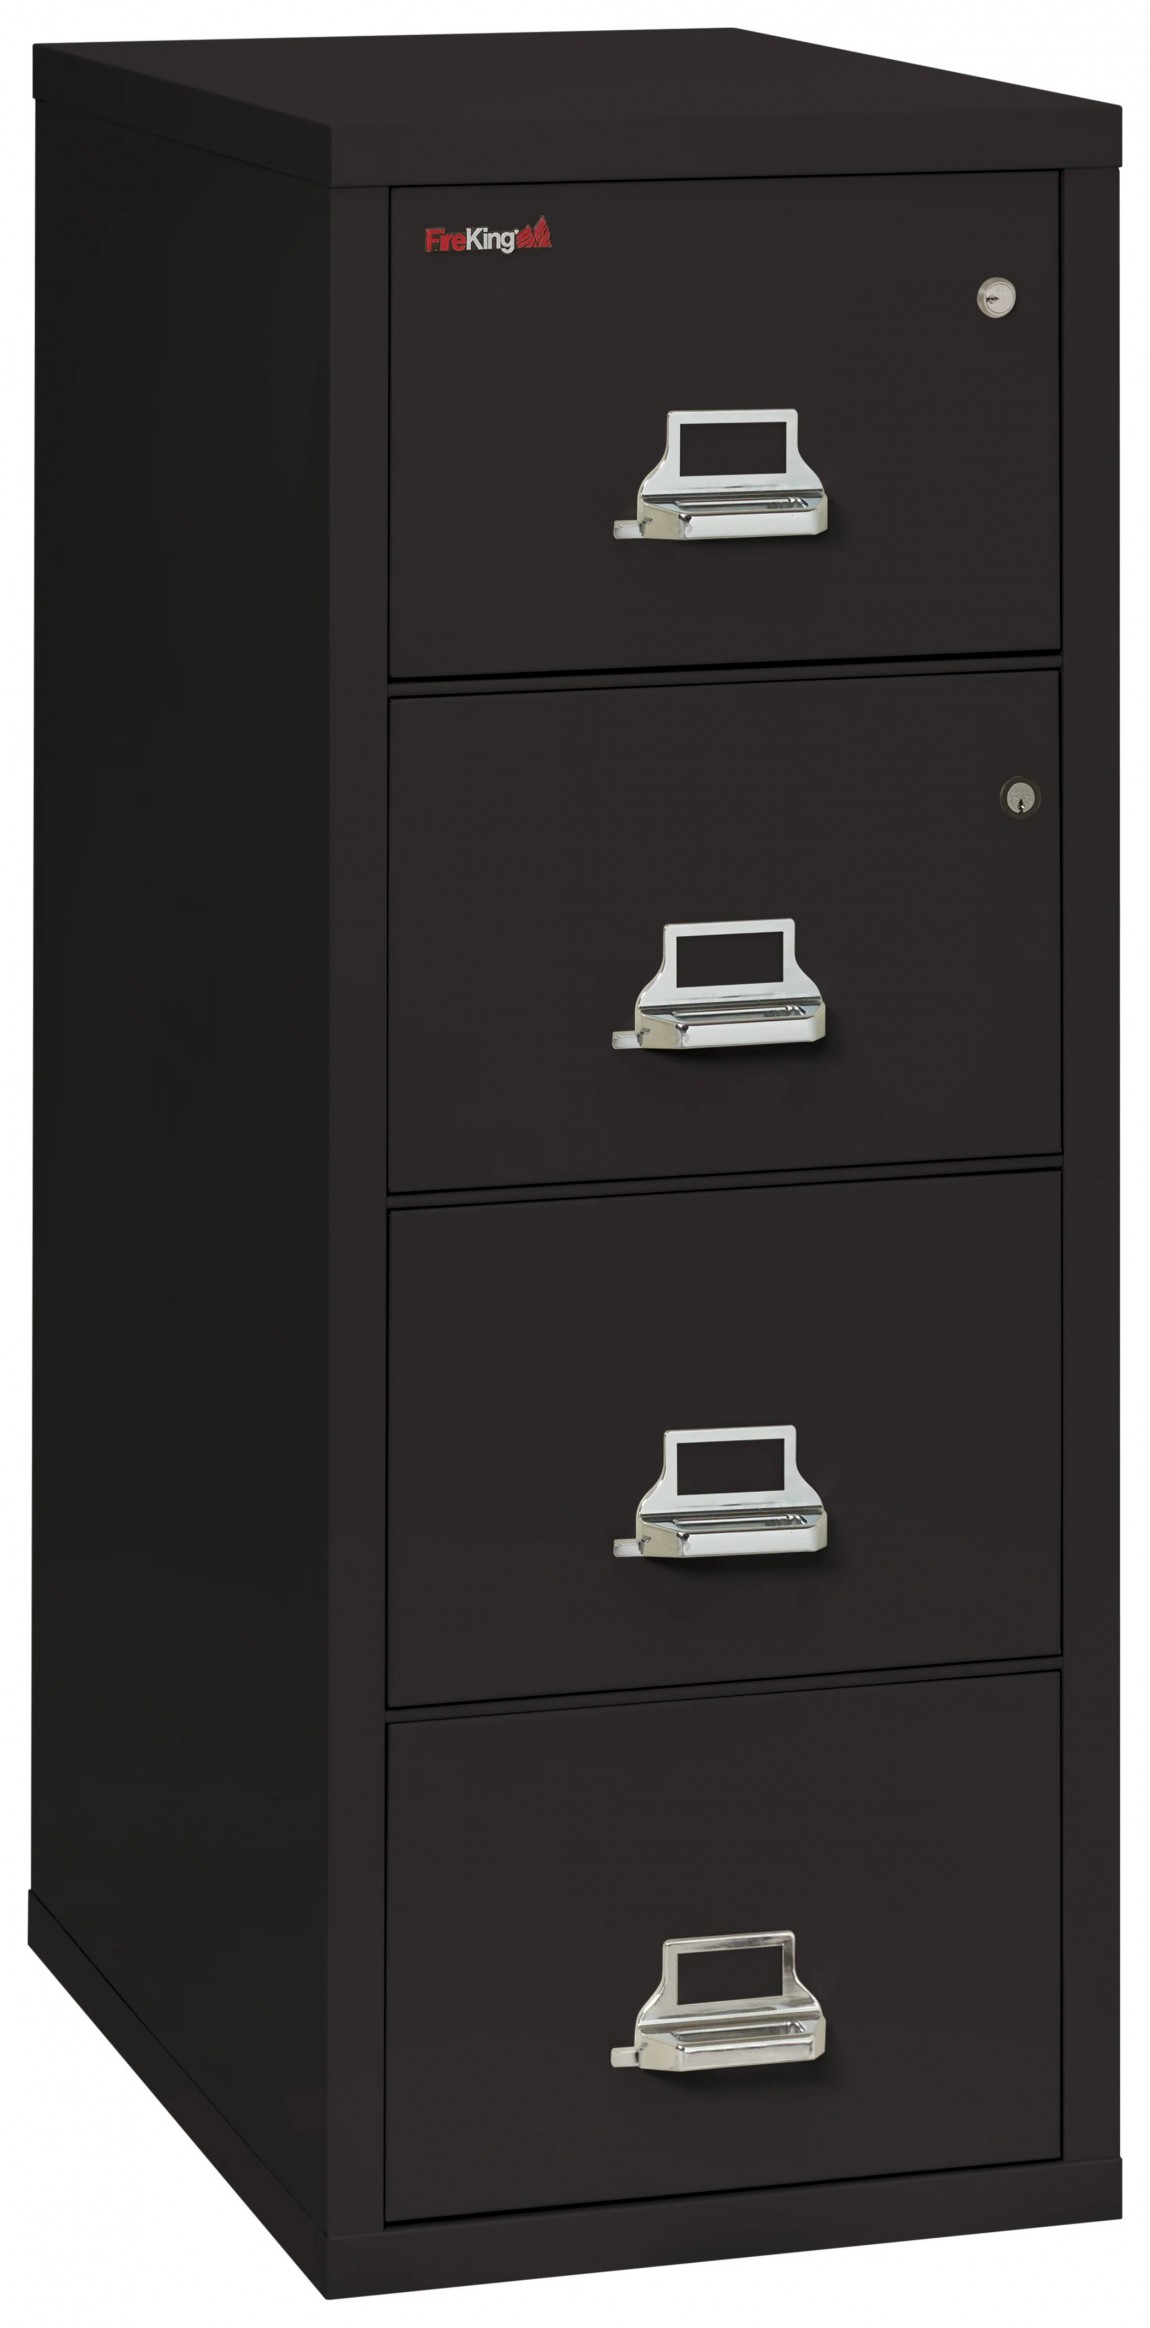 4 Drawer Fireproof File Cabinet with Hidden Safe